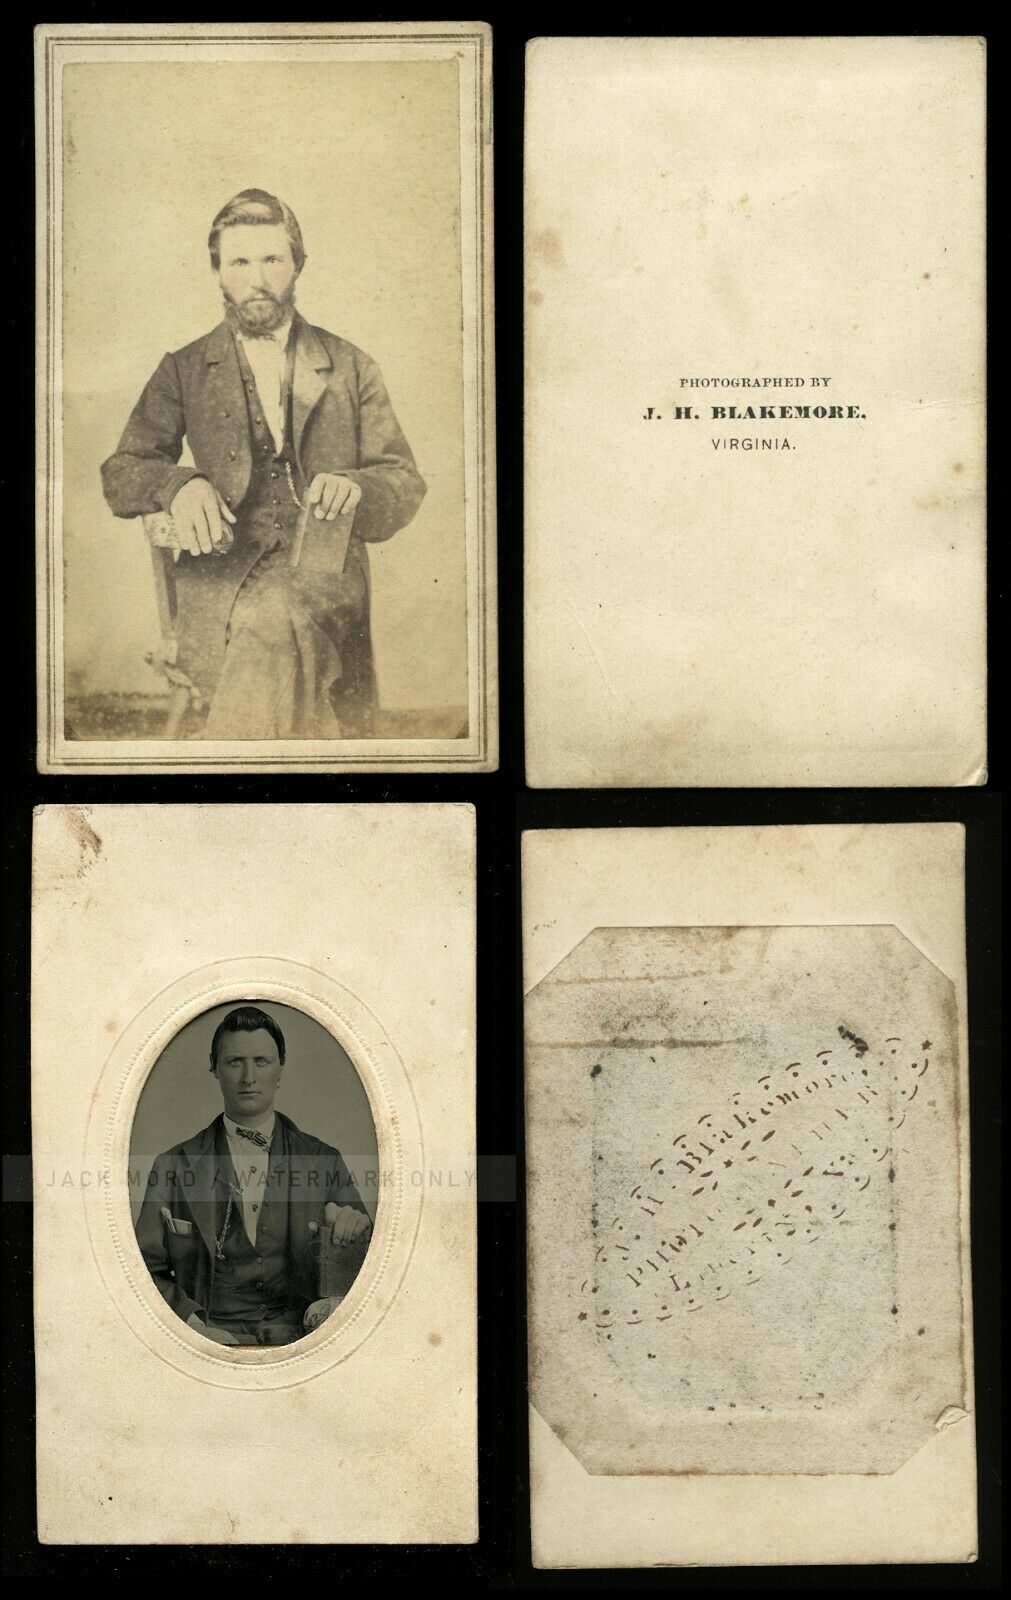 1860s cdv & tintype photos by civil war era virginia photographer jh blakemore